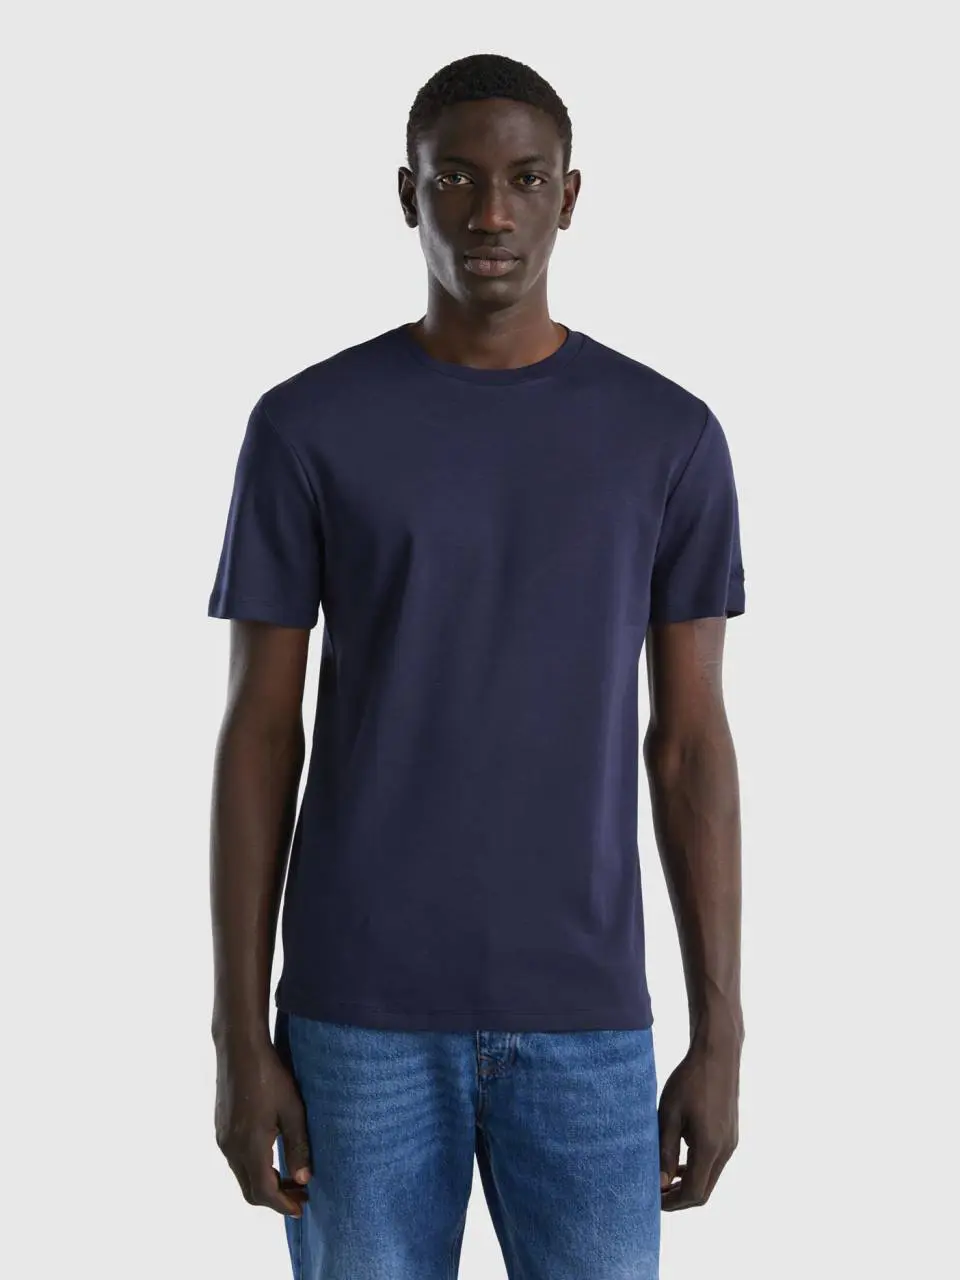 Benetton 100% cotton t-shirt. 1